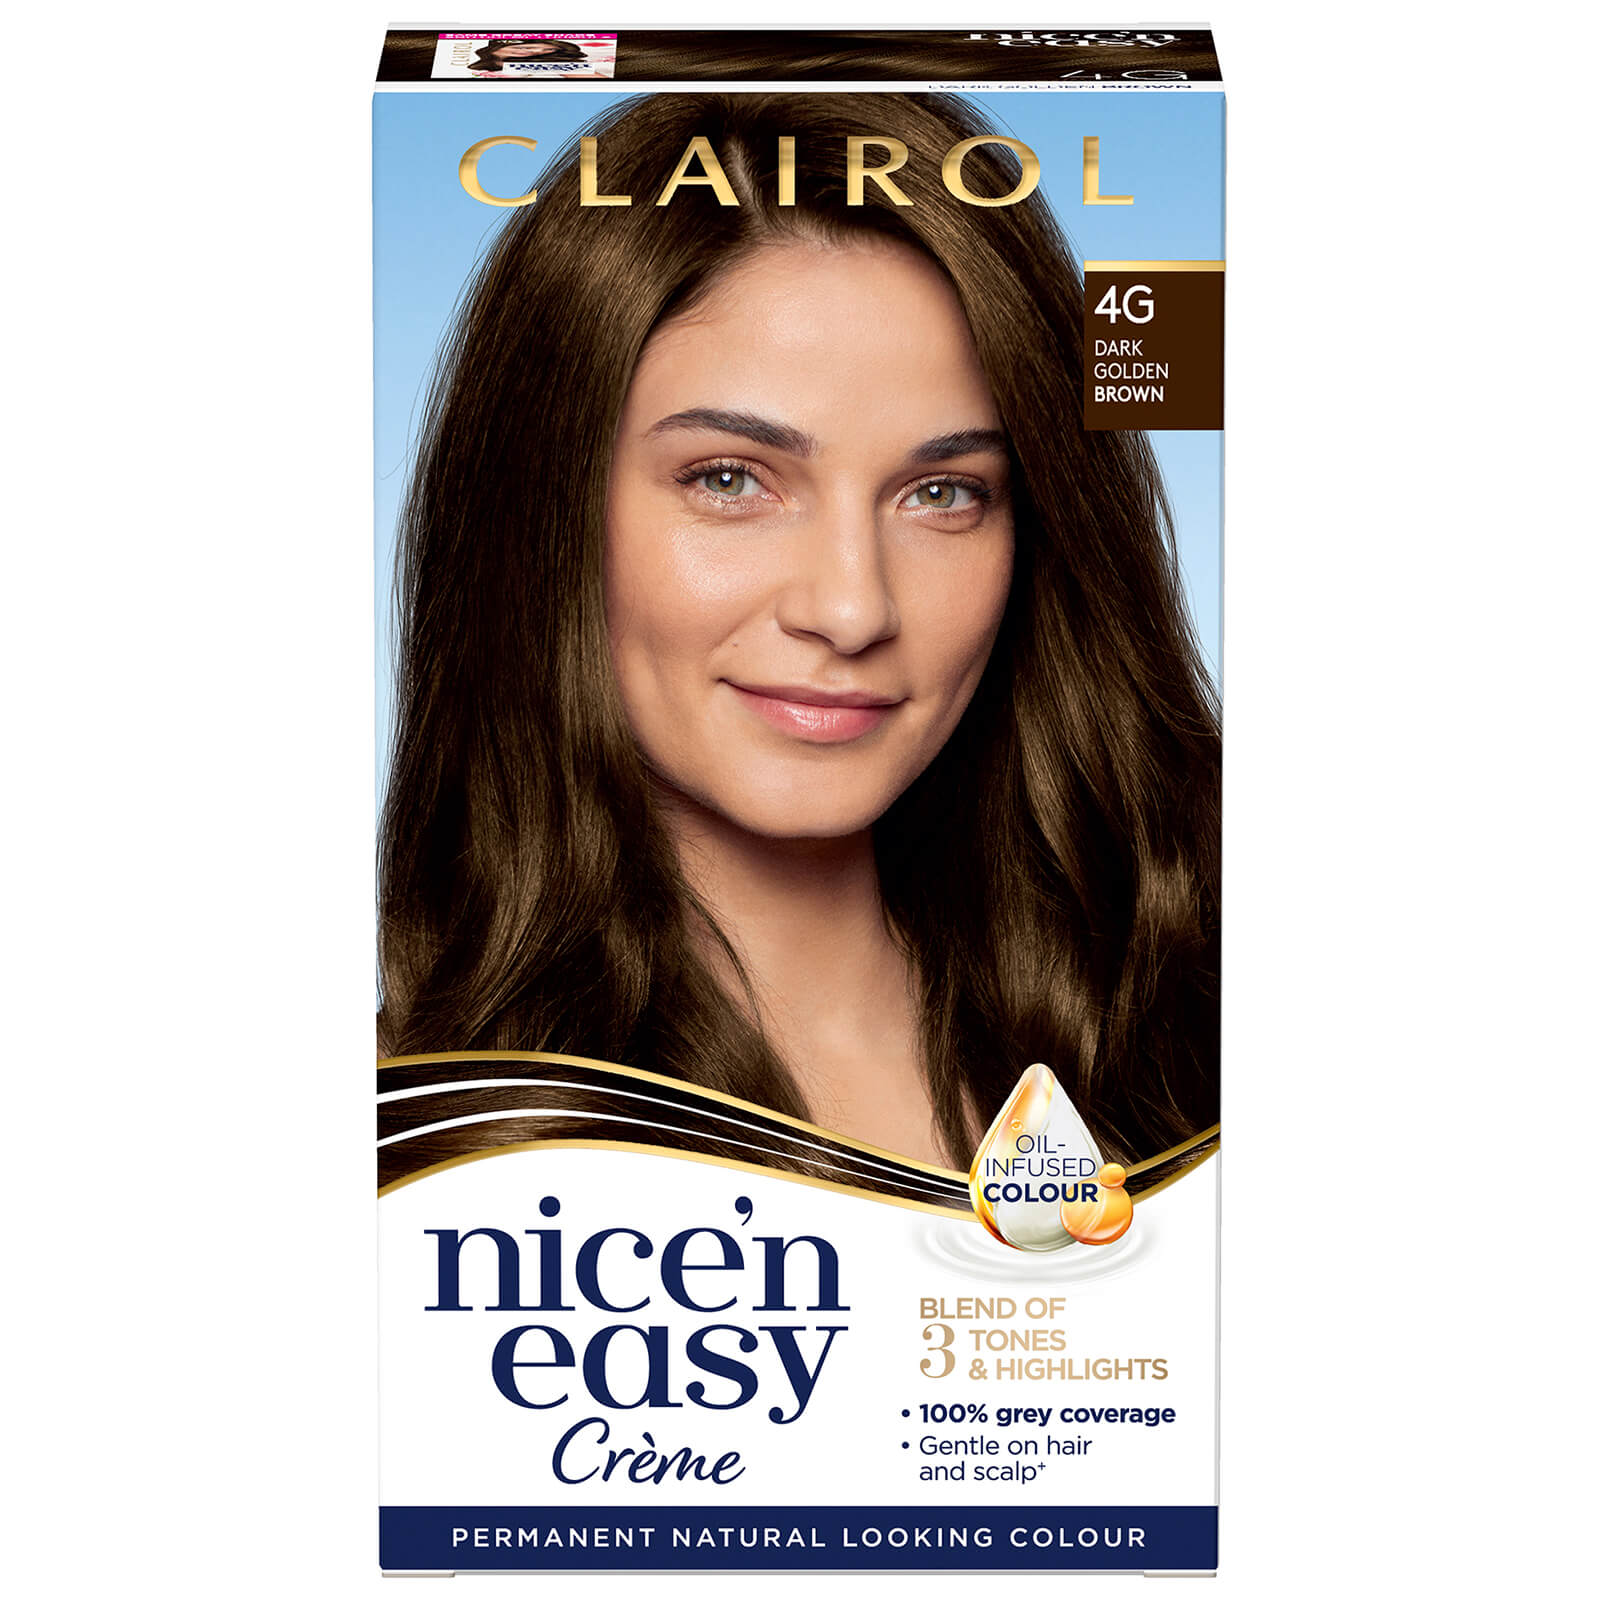 Clairol Nice' n Easy Crème Natural Looking Oil Infused Permanent Hair Dye 177ml (Various Shades) - 4G Dark Golden Brown